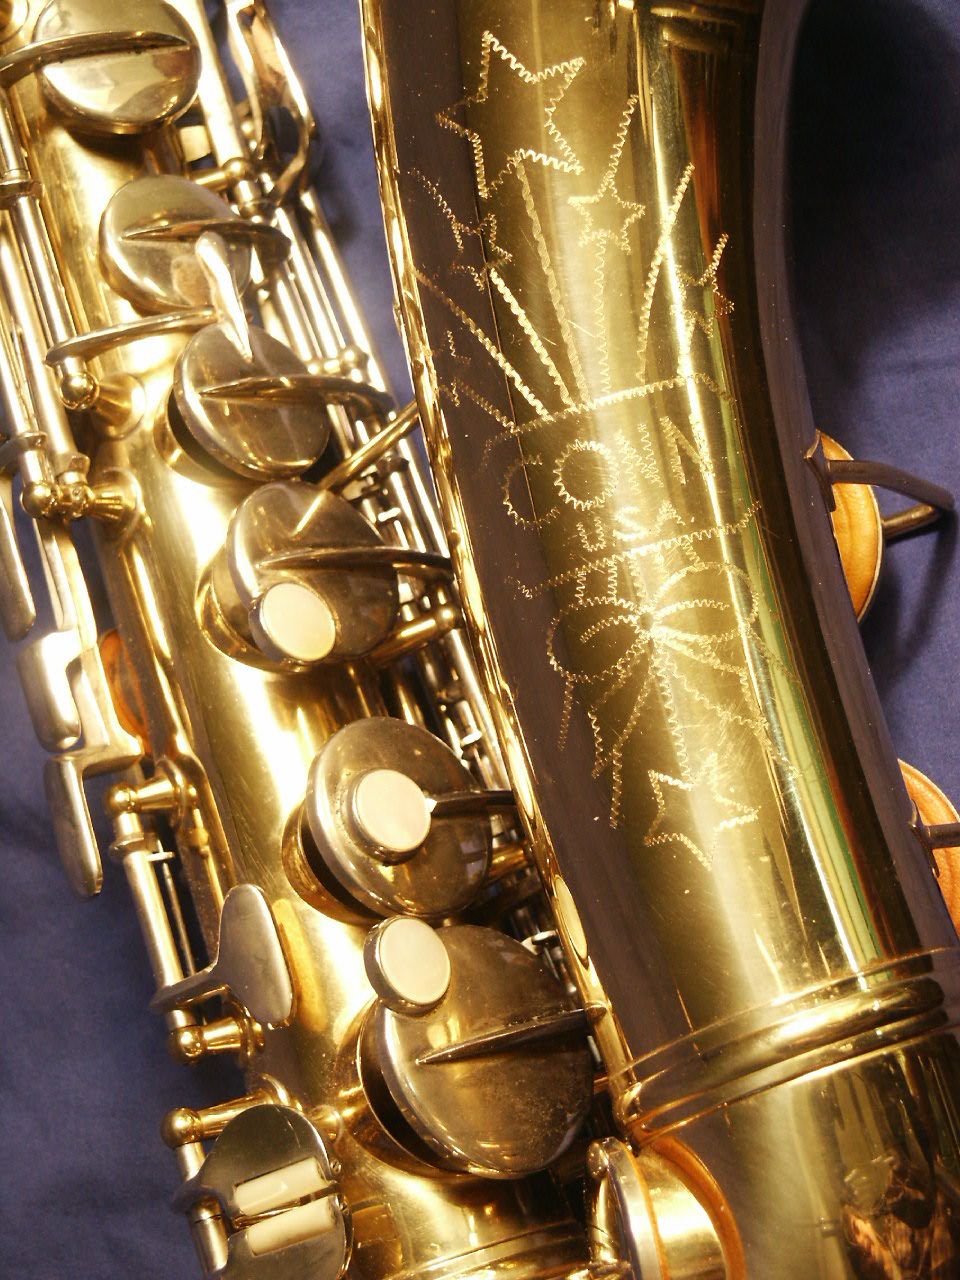 Dating selmer saxophones